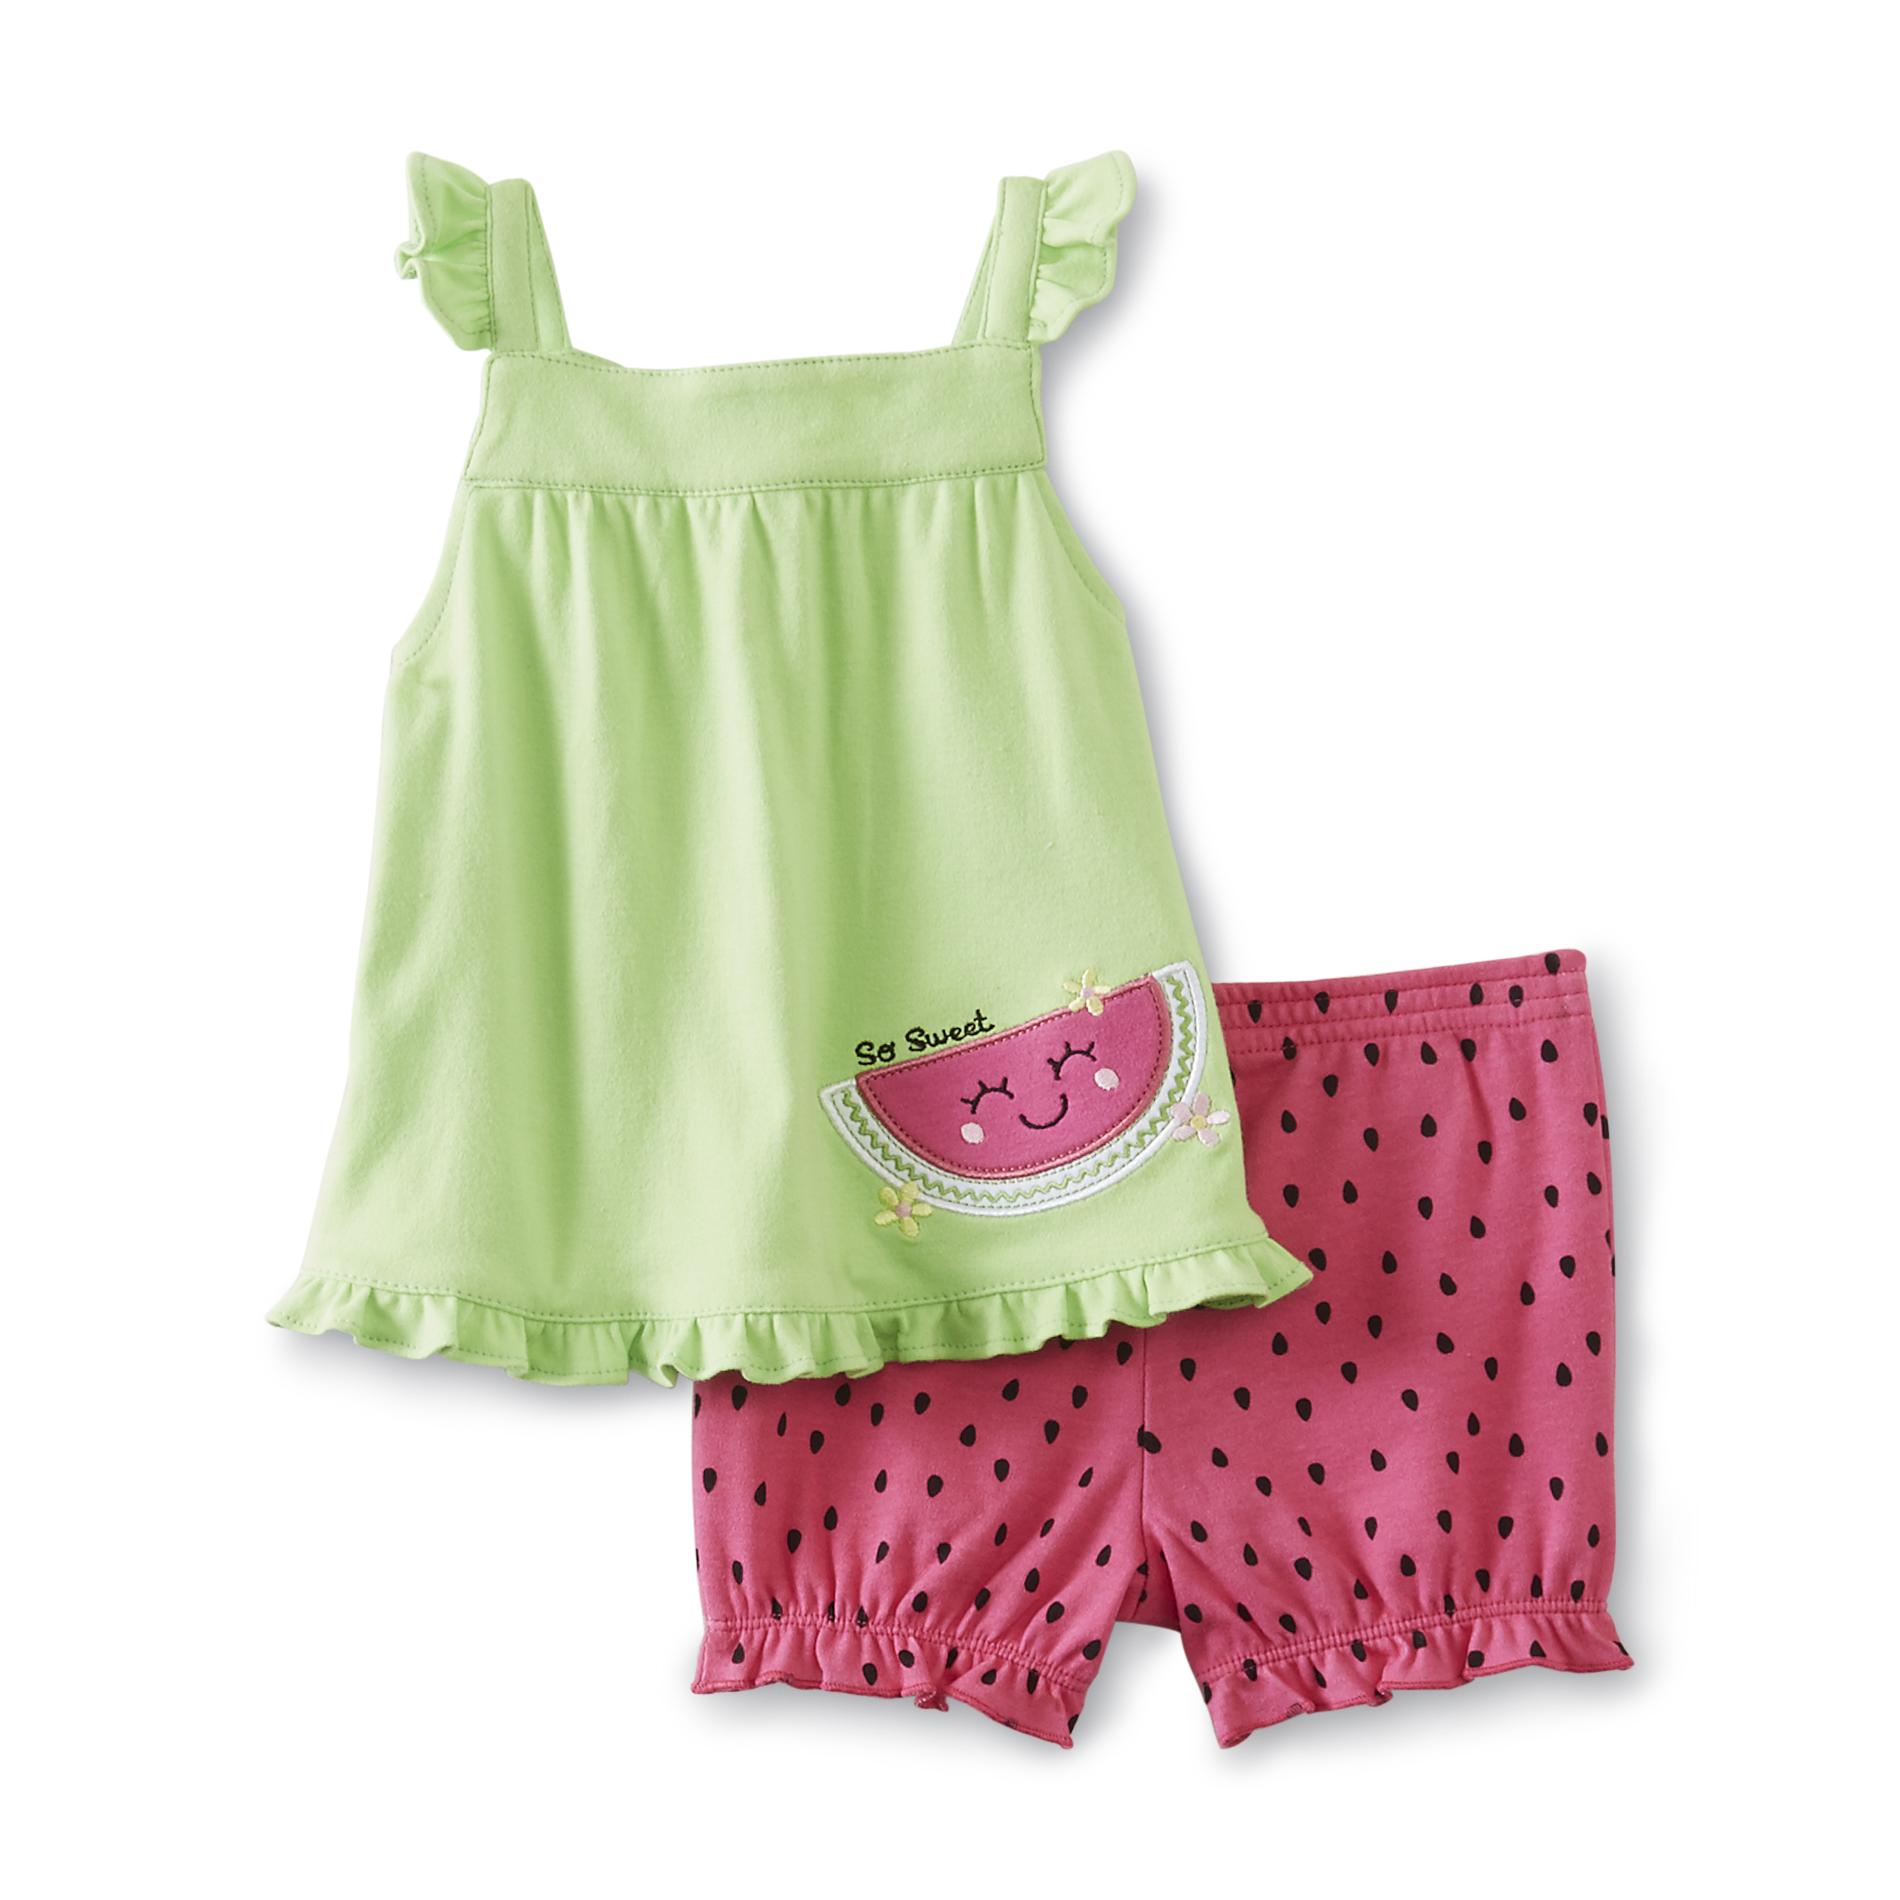 Small Wonders Newborn Girl's Top & Shorts - Watermelon